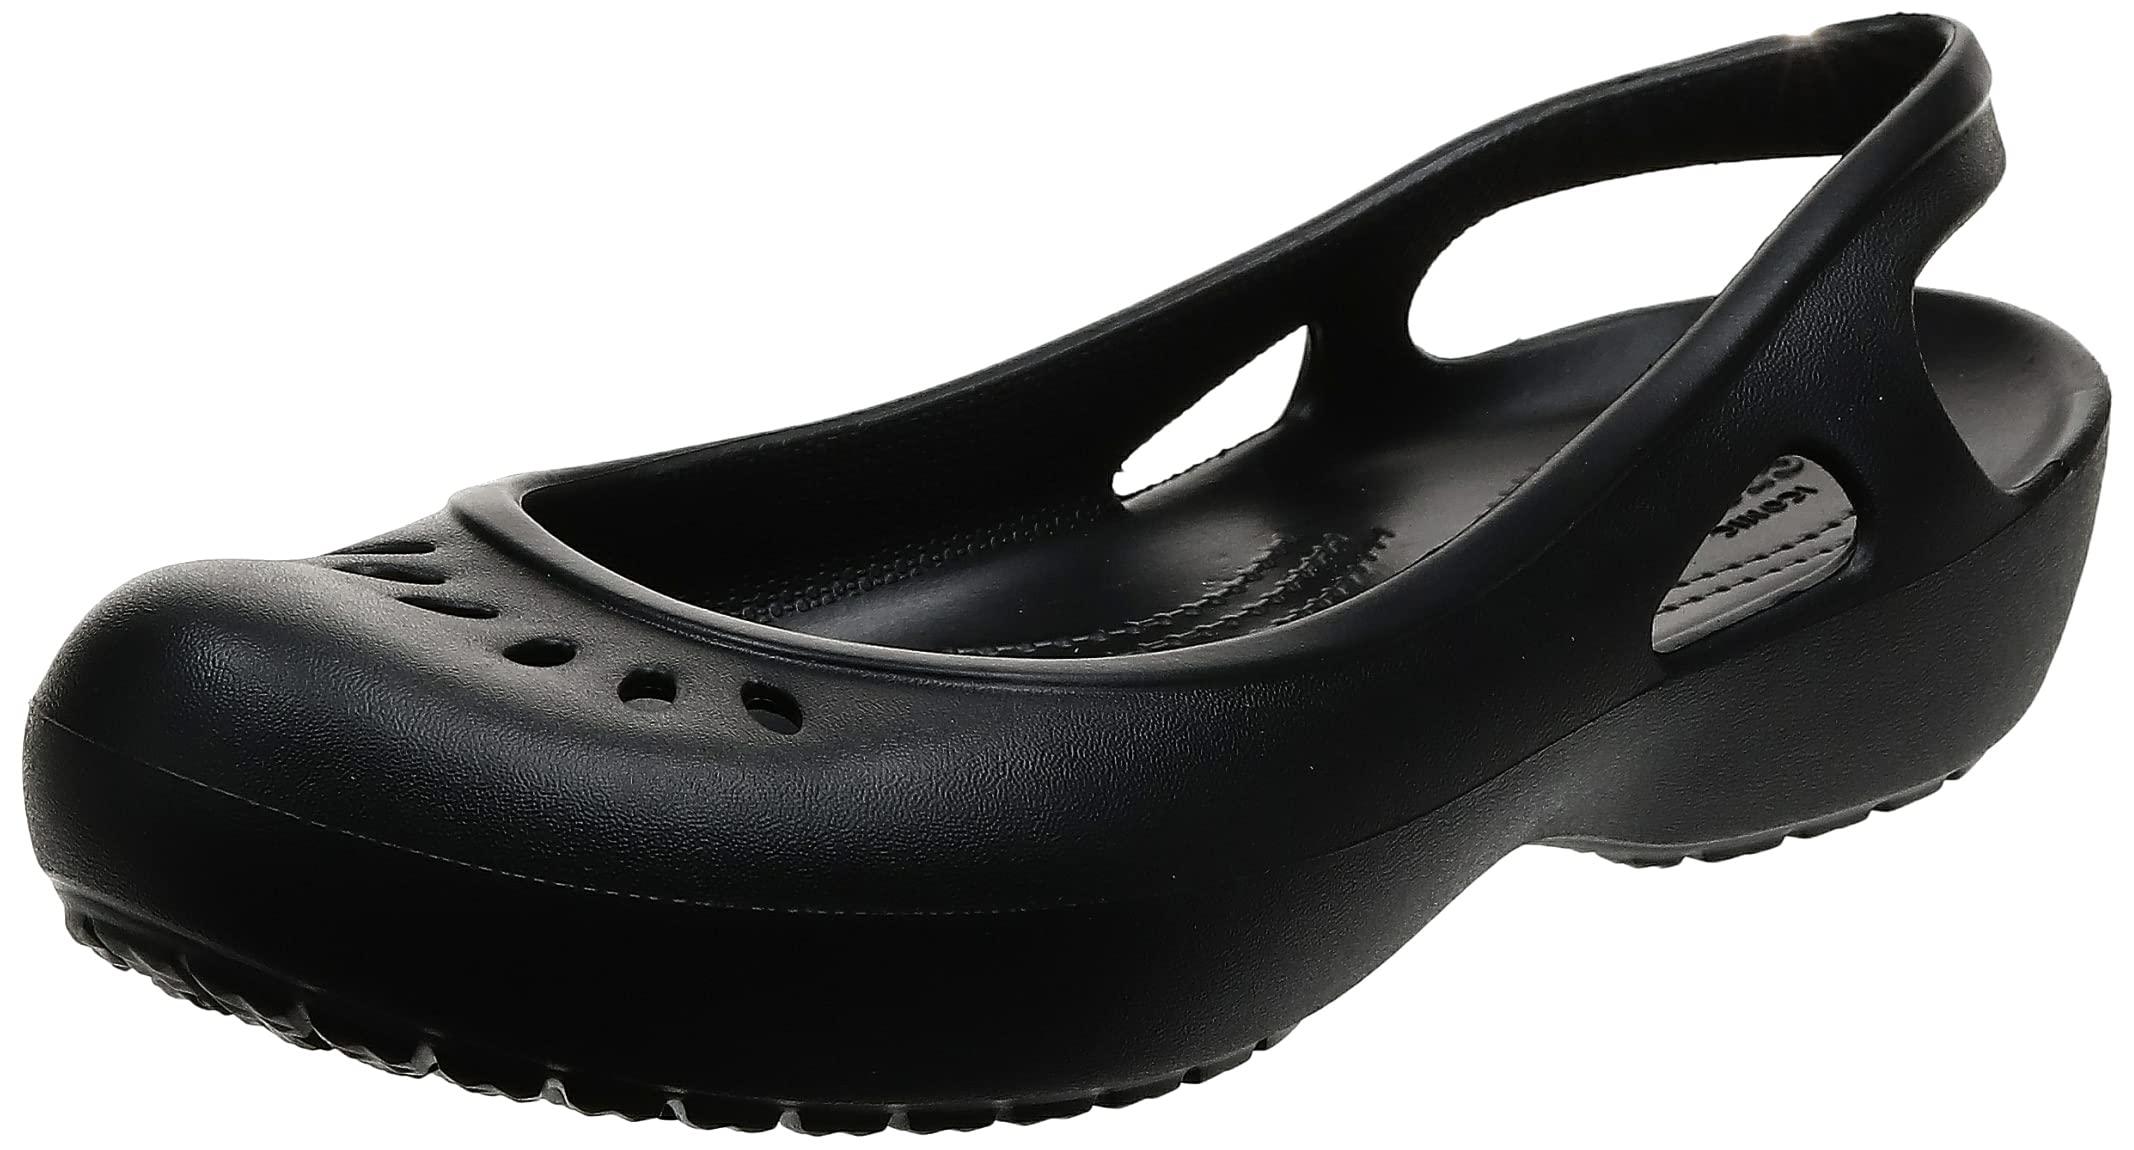 Crocs™ Kadee Work Ballet Flats in Black/Black (Black) - Save 72% | Lyst